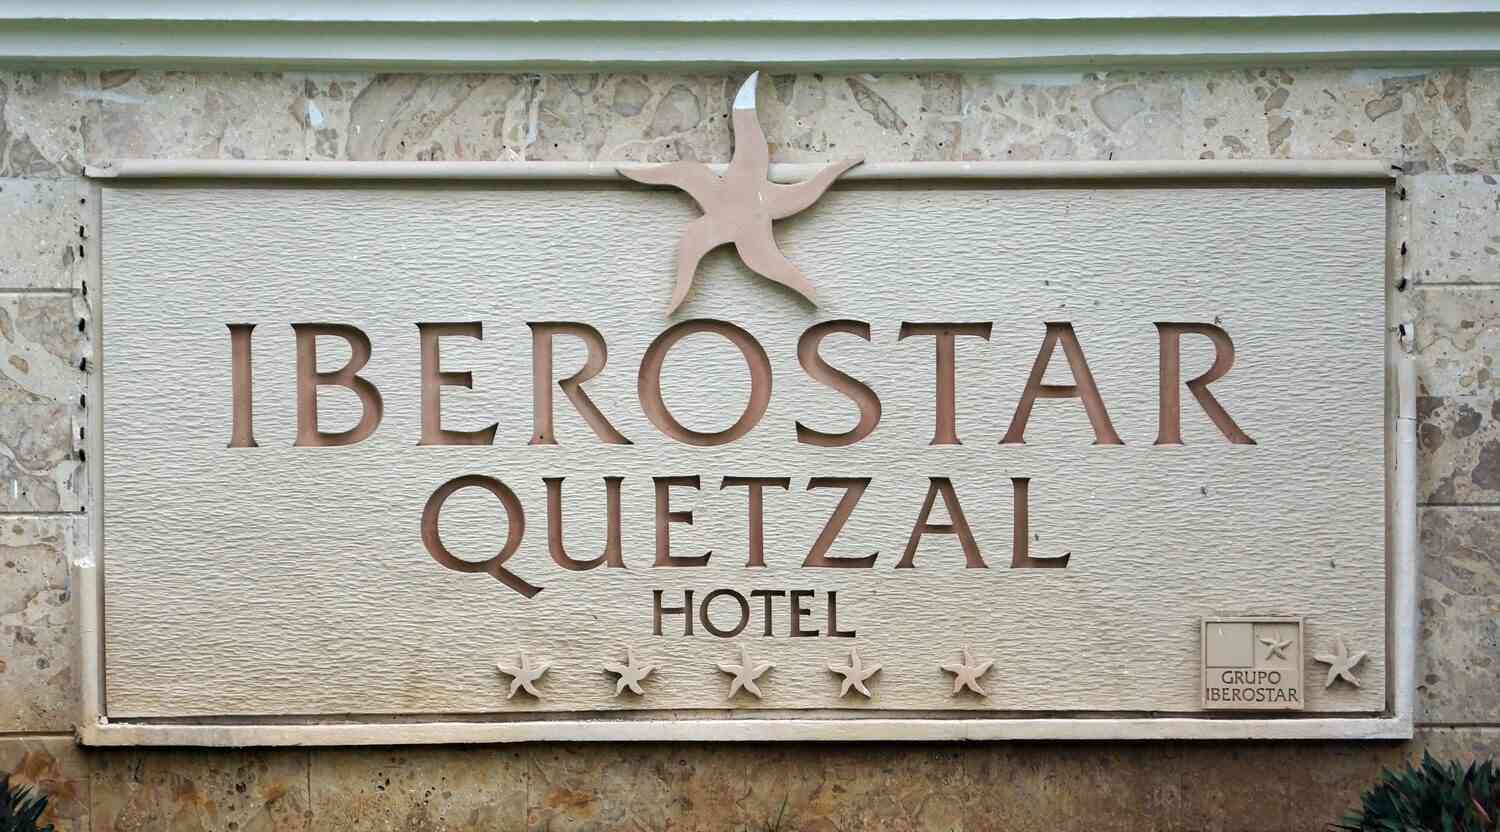 Iberostar Quetzal Hotel entrance sign in Playacar.